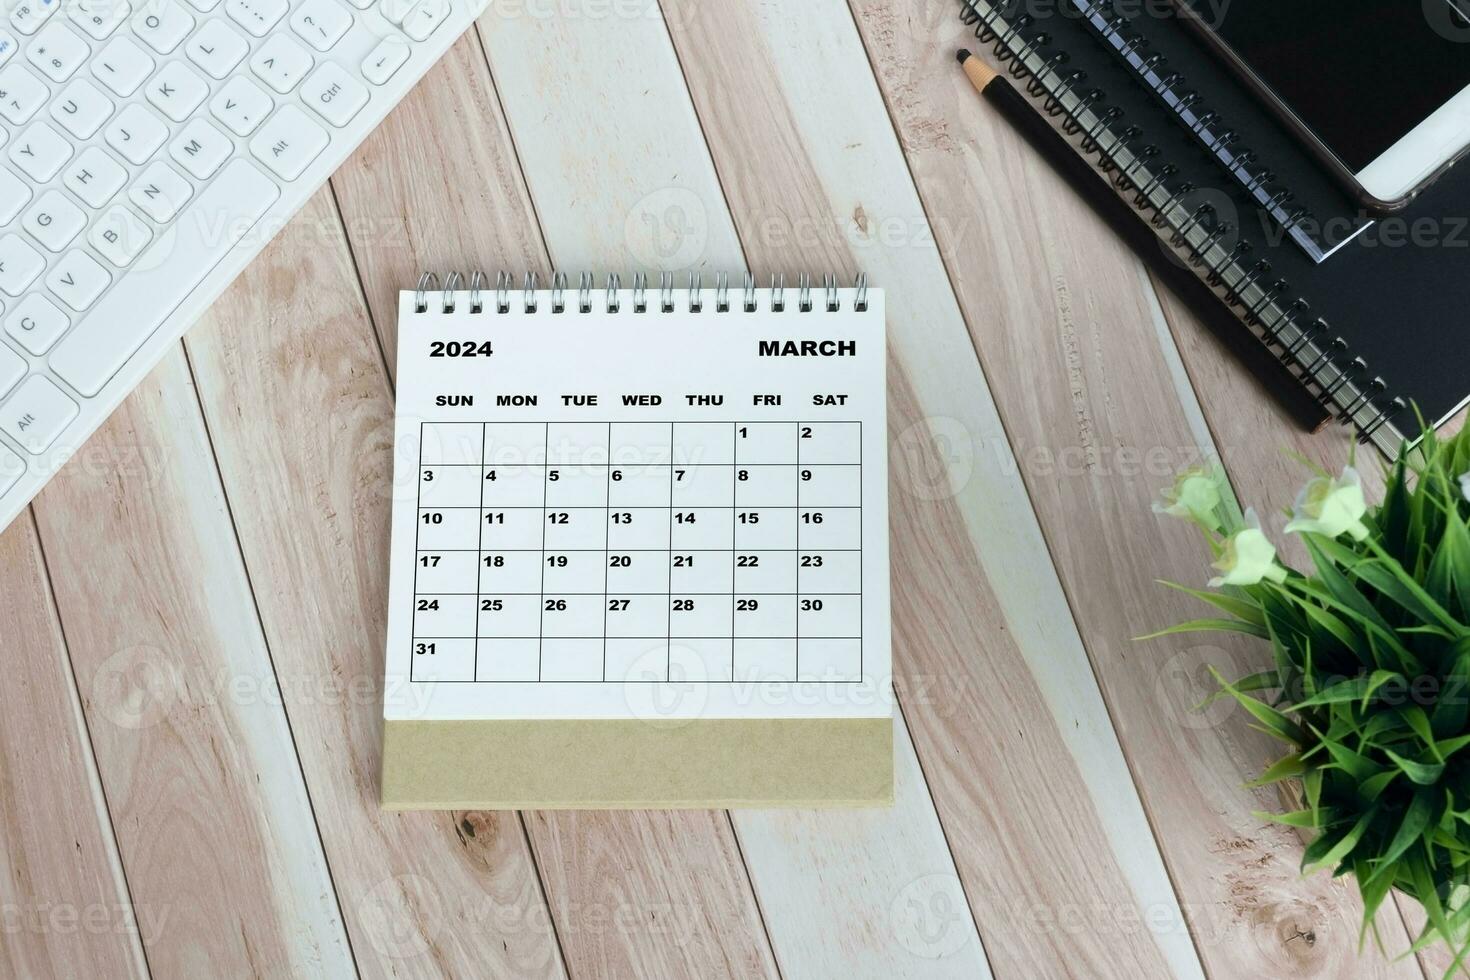 blanco marzo 2024 calendario en oficina de madera escritorio. foto